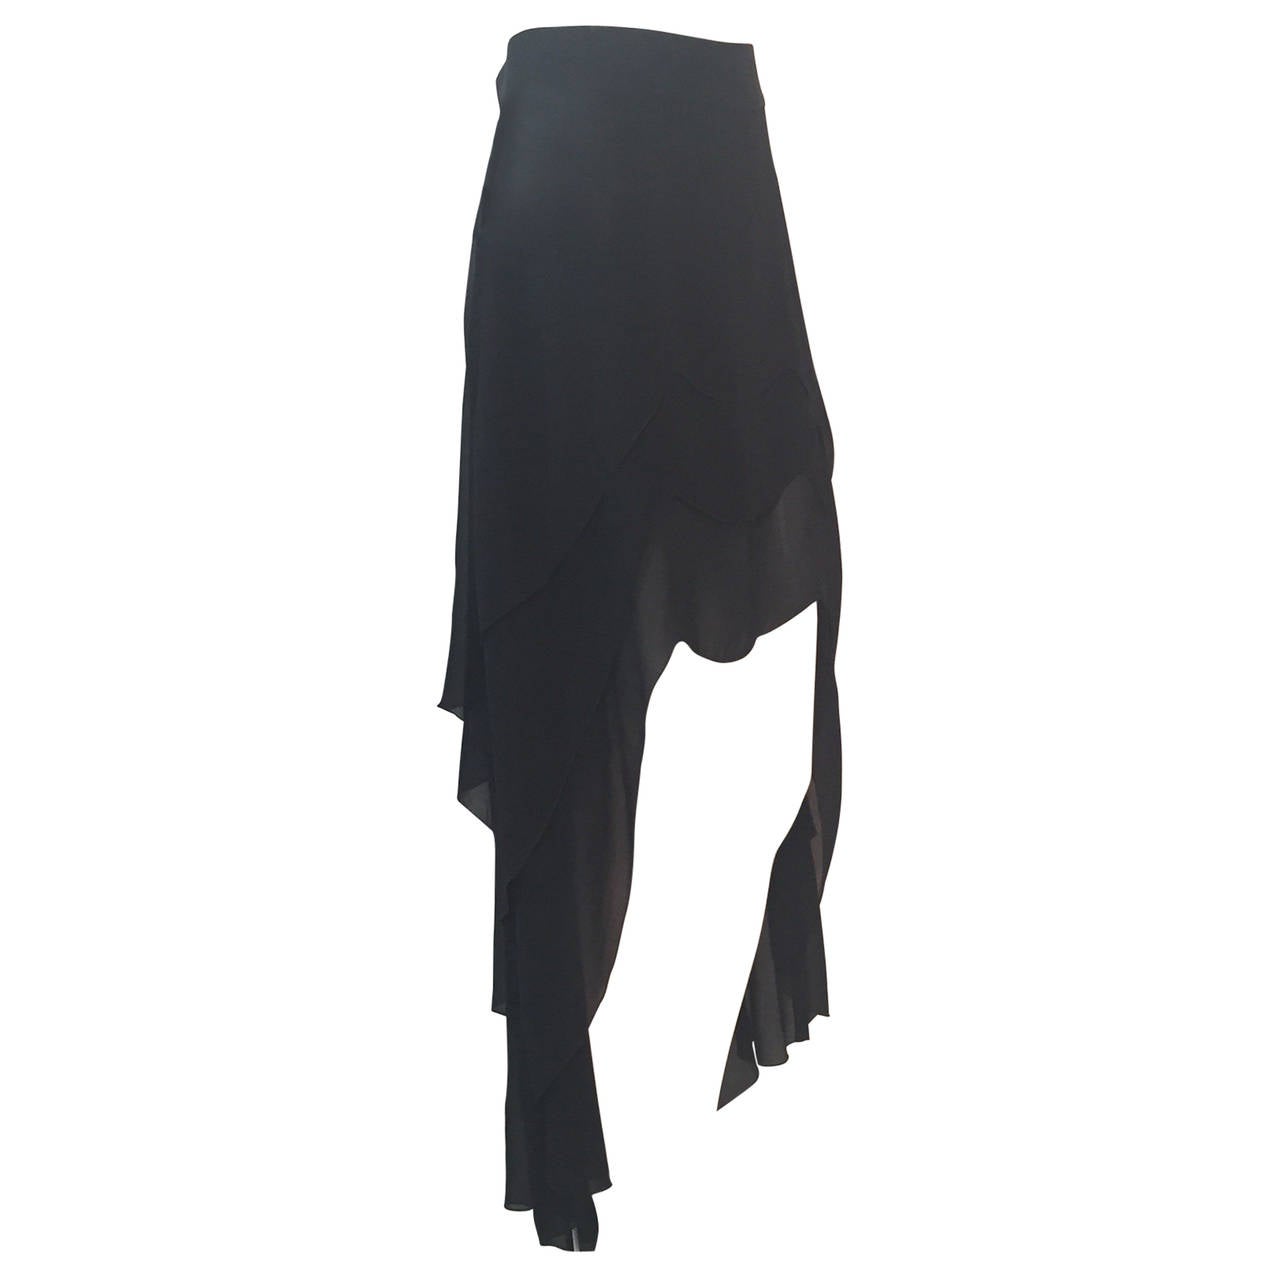 1980s Karl Lagerfeld 3-Tiered Scalloped "Hi-Low" Hem Skirt in Black Silk Chiffon